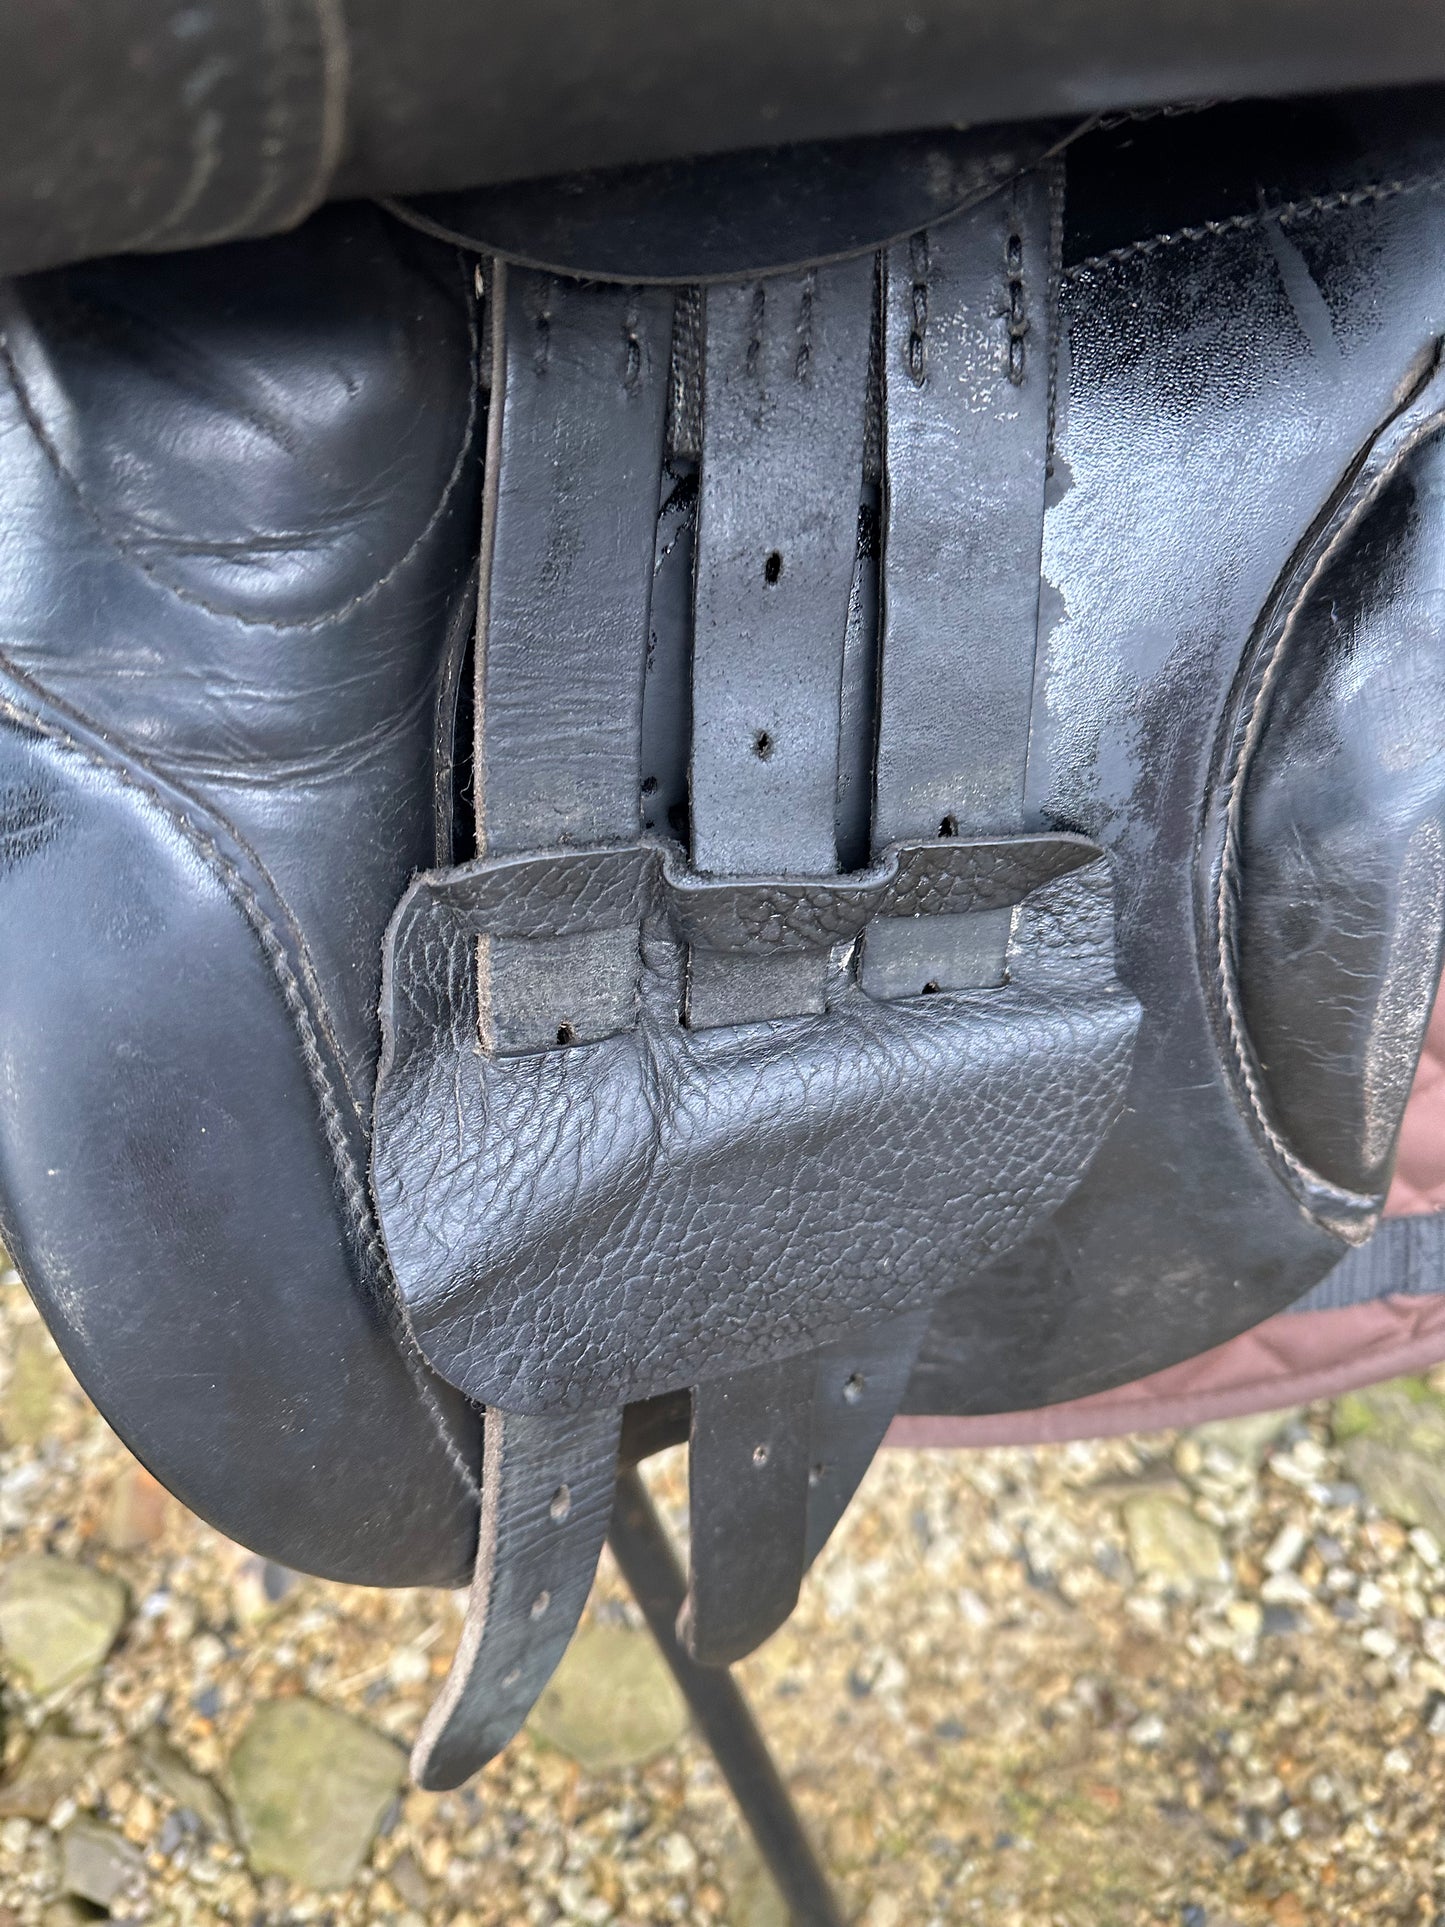 15.5” M&J saddlery black working hunter saddle